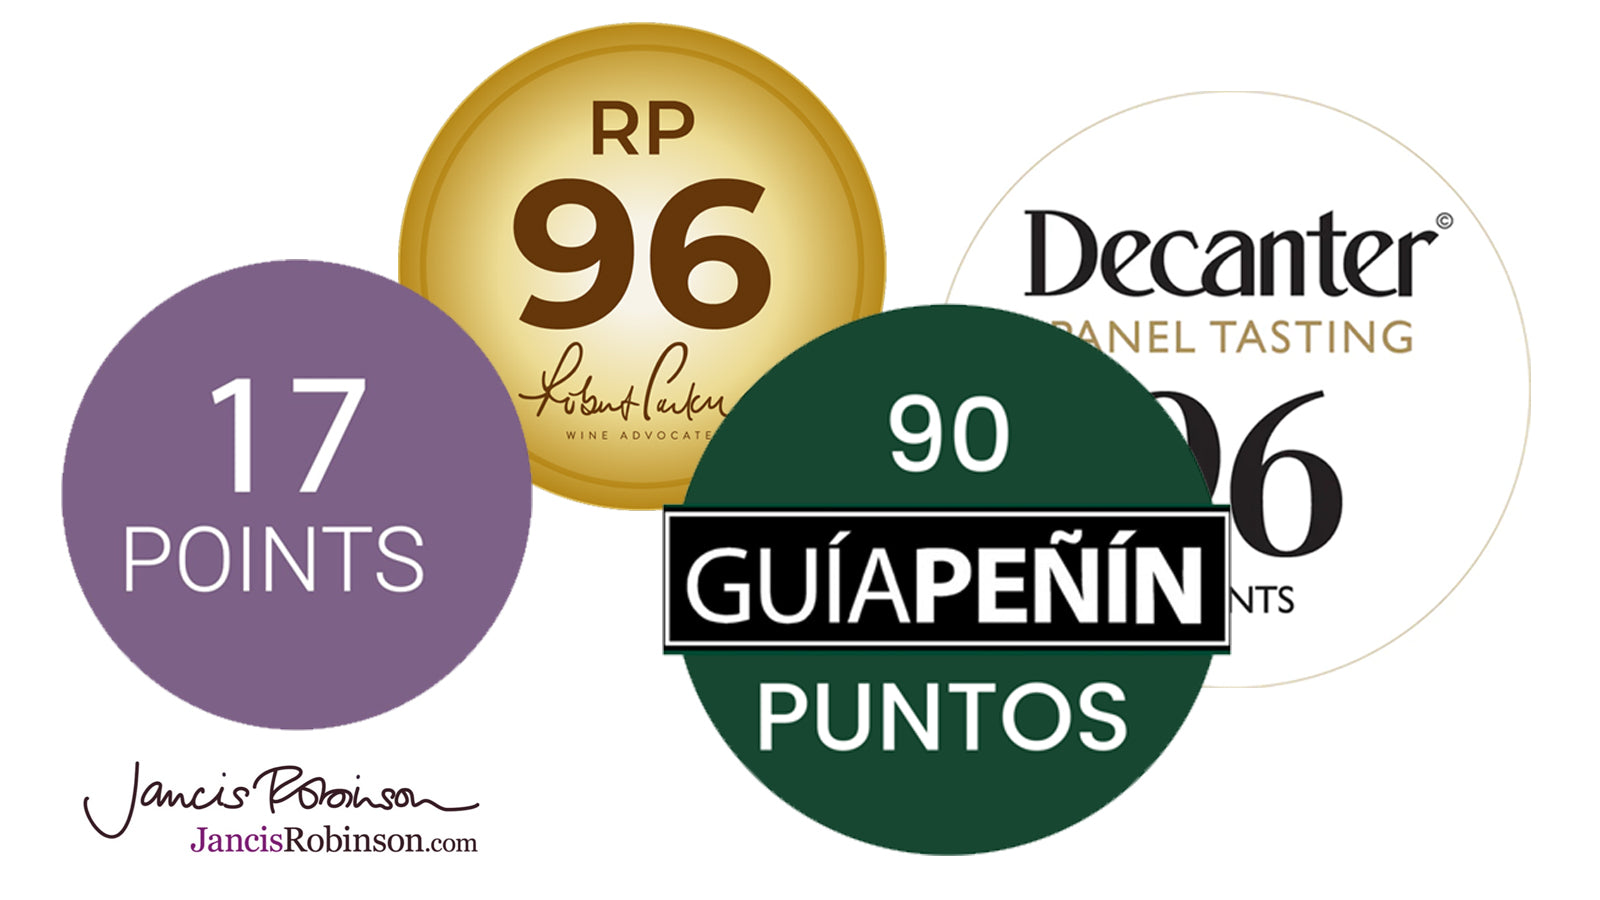 Several badges showing wine rating points